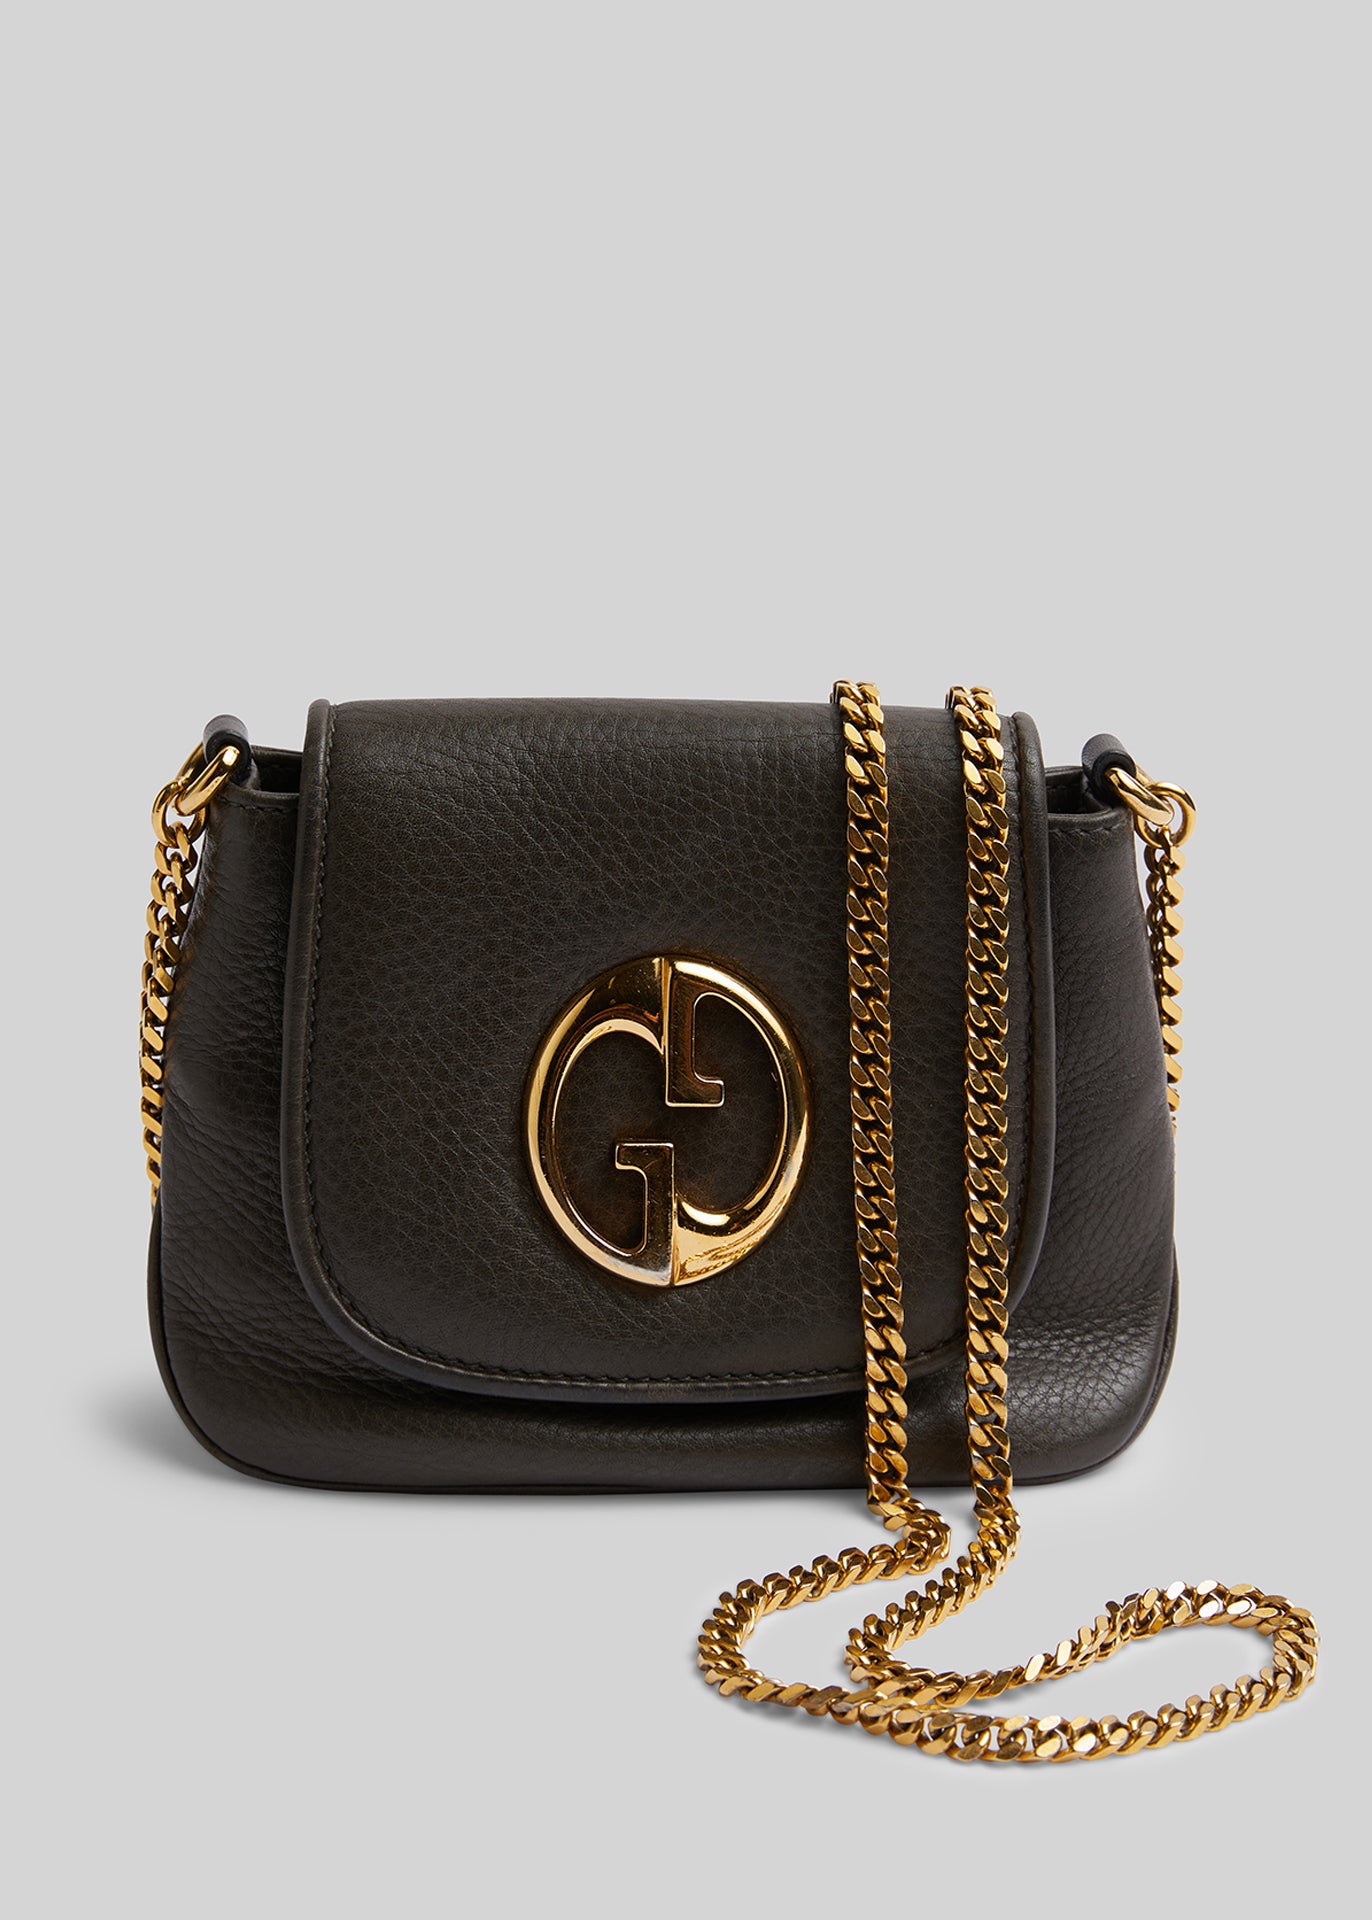 Gucci 1973 chain bag